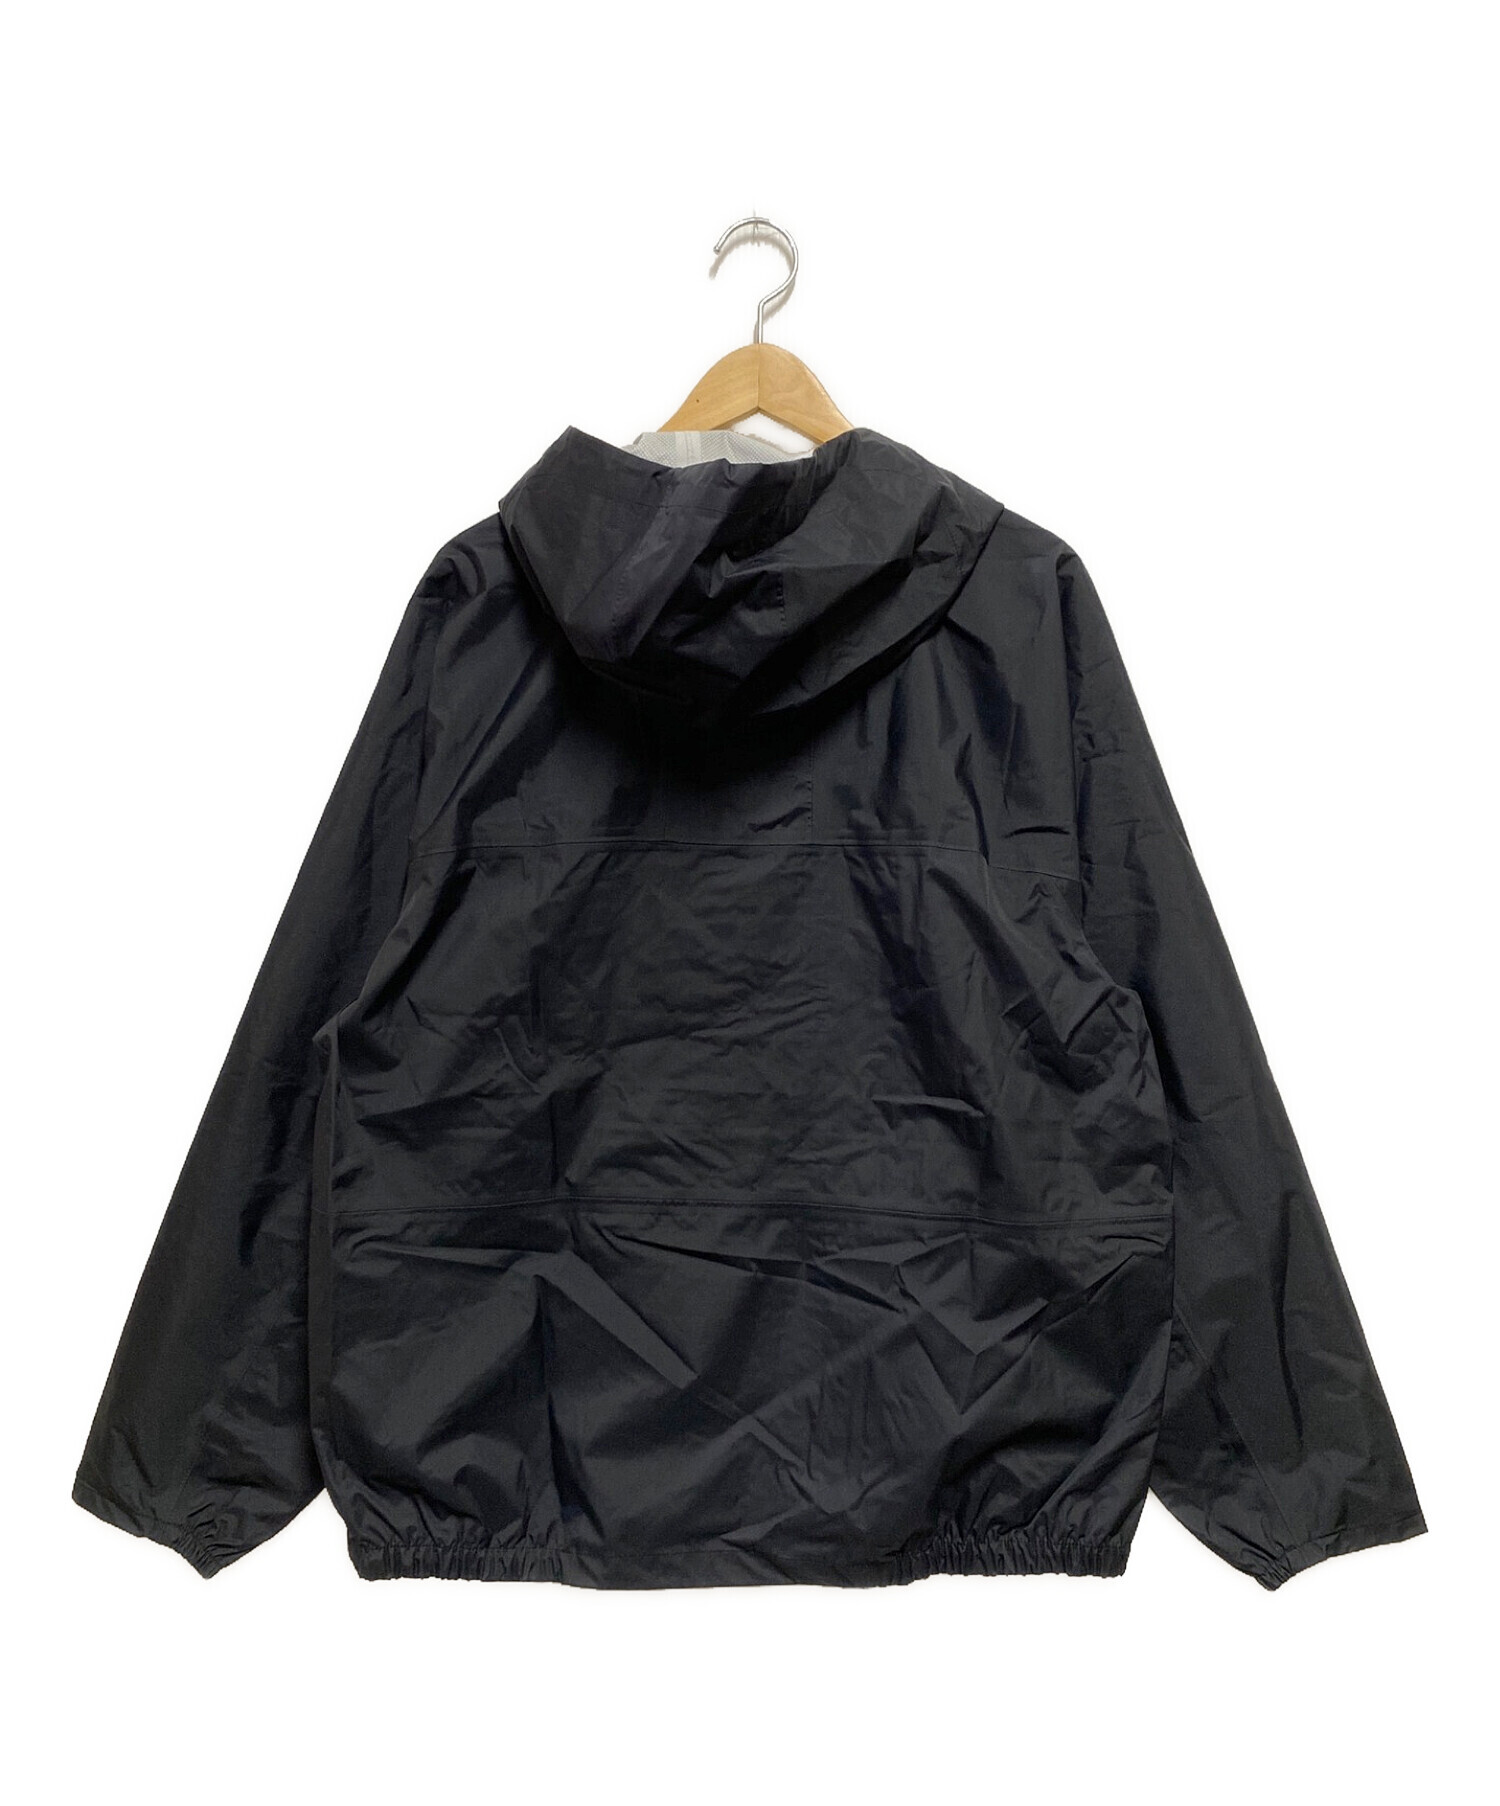 NIKE ACG (ナイキエージーシー) ナイロンジャケット ブラック サイズ:S